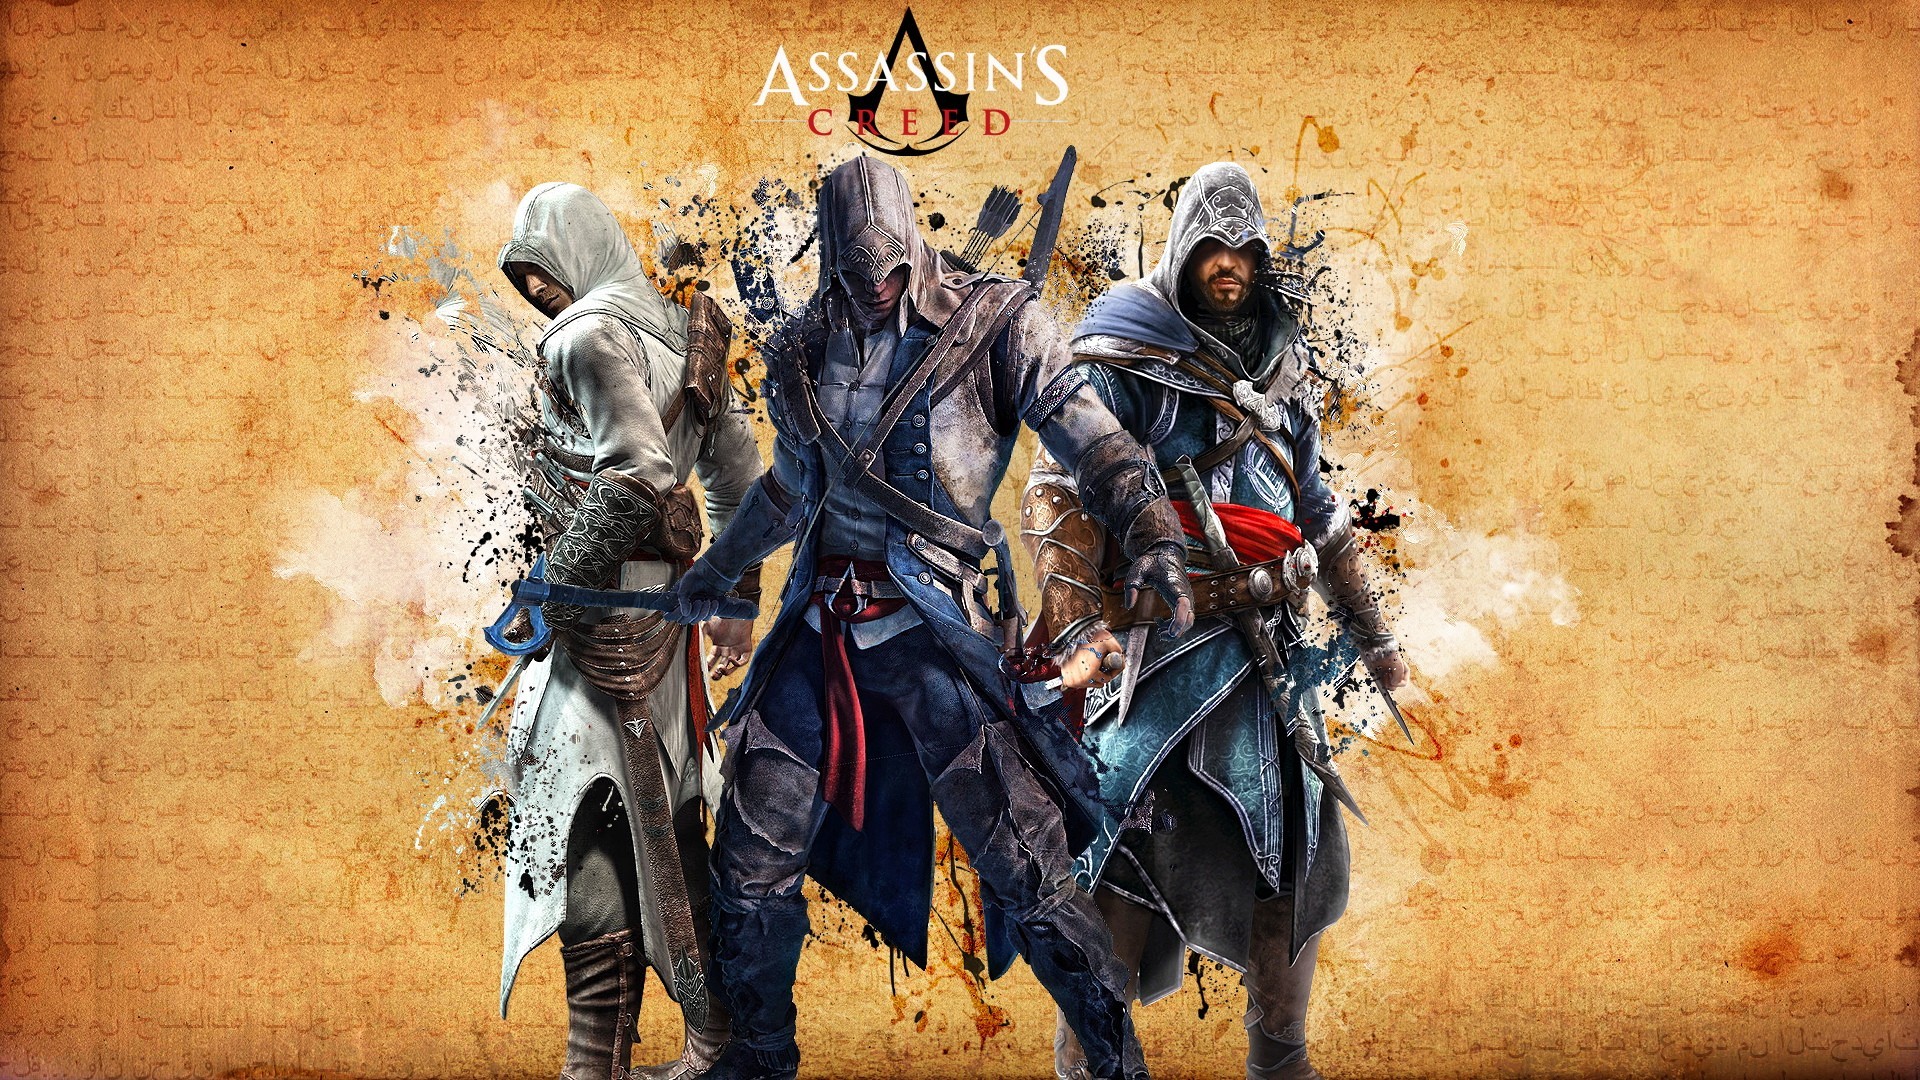 Assassins Creed, Altaïr Ibn LaAhad, Ezio Auditore Da Firenze Wallpaper